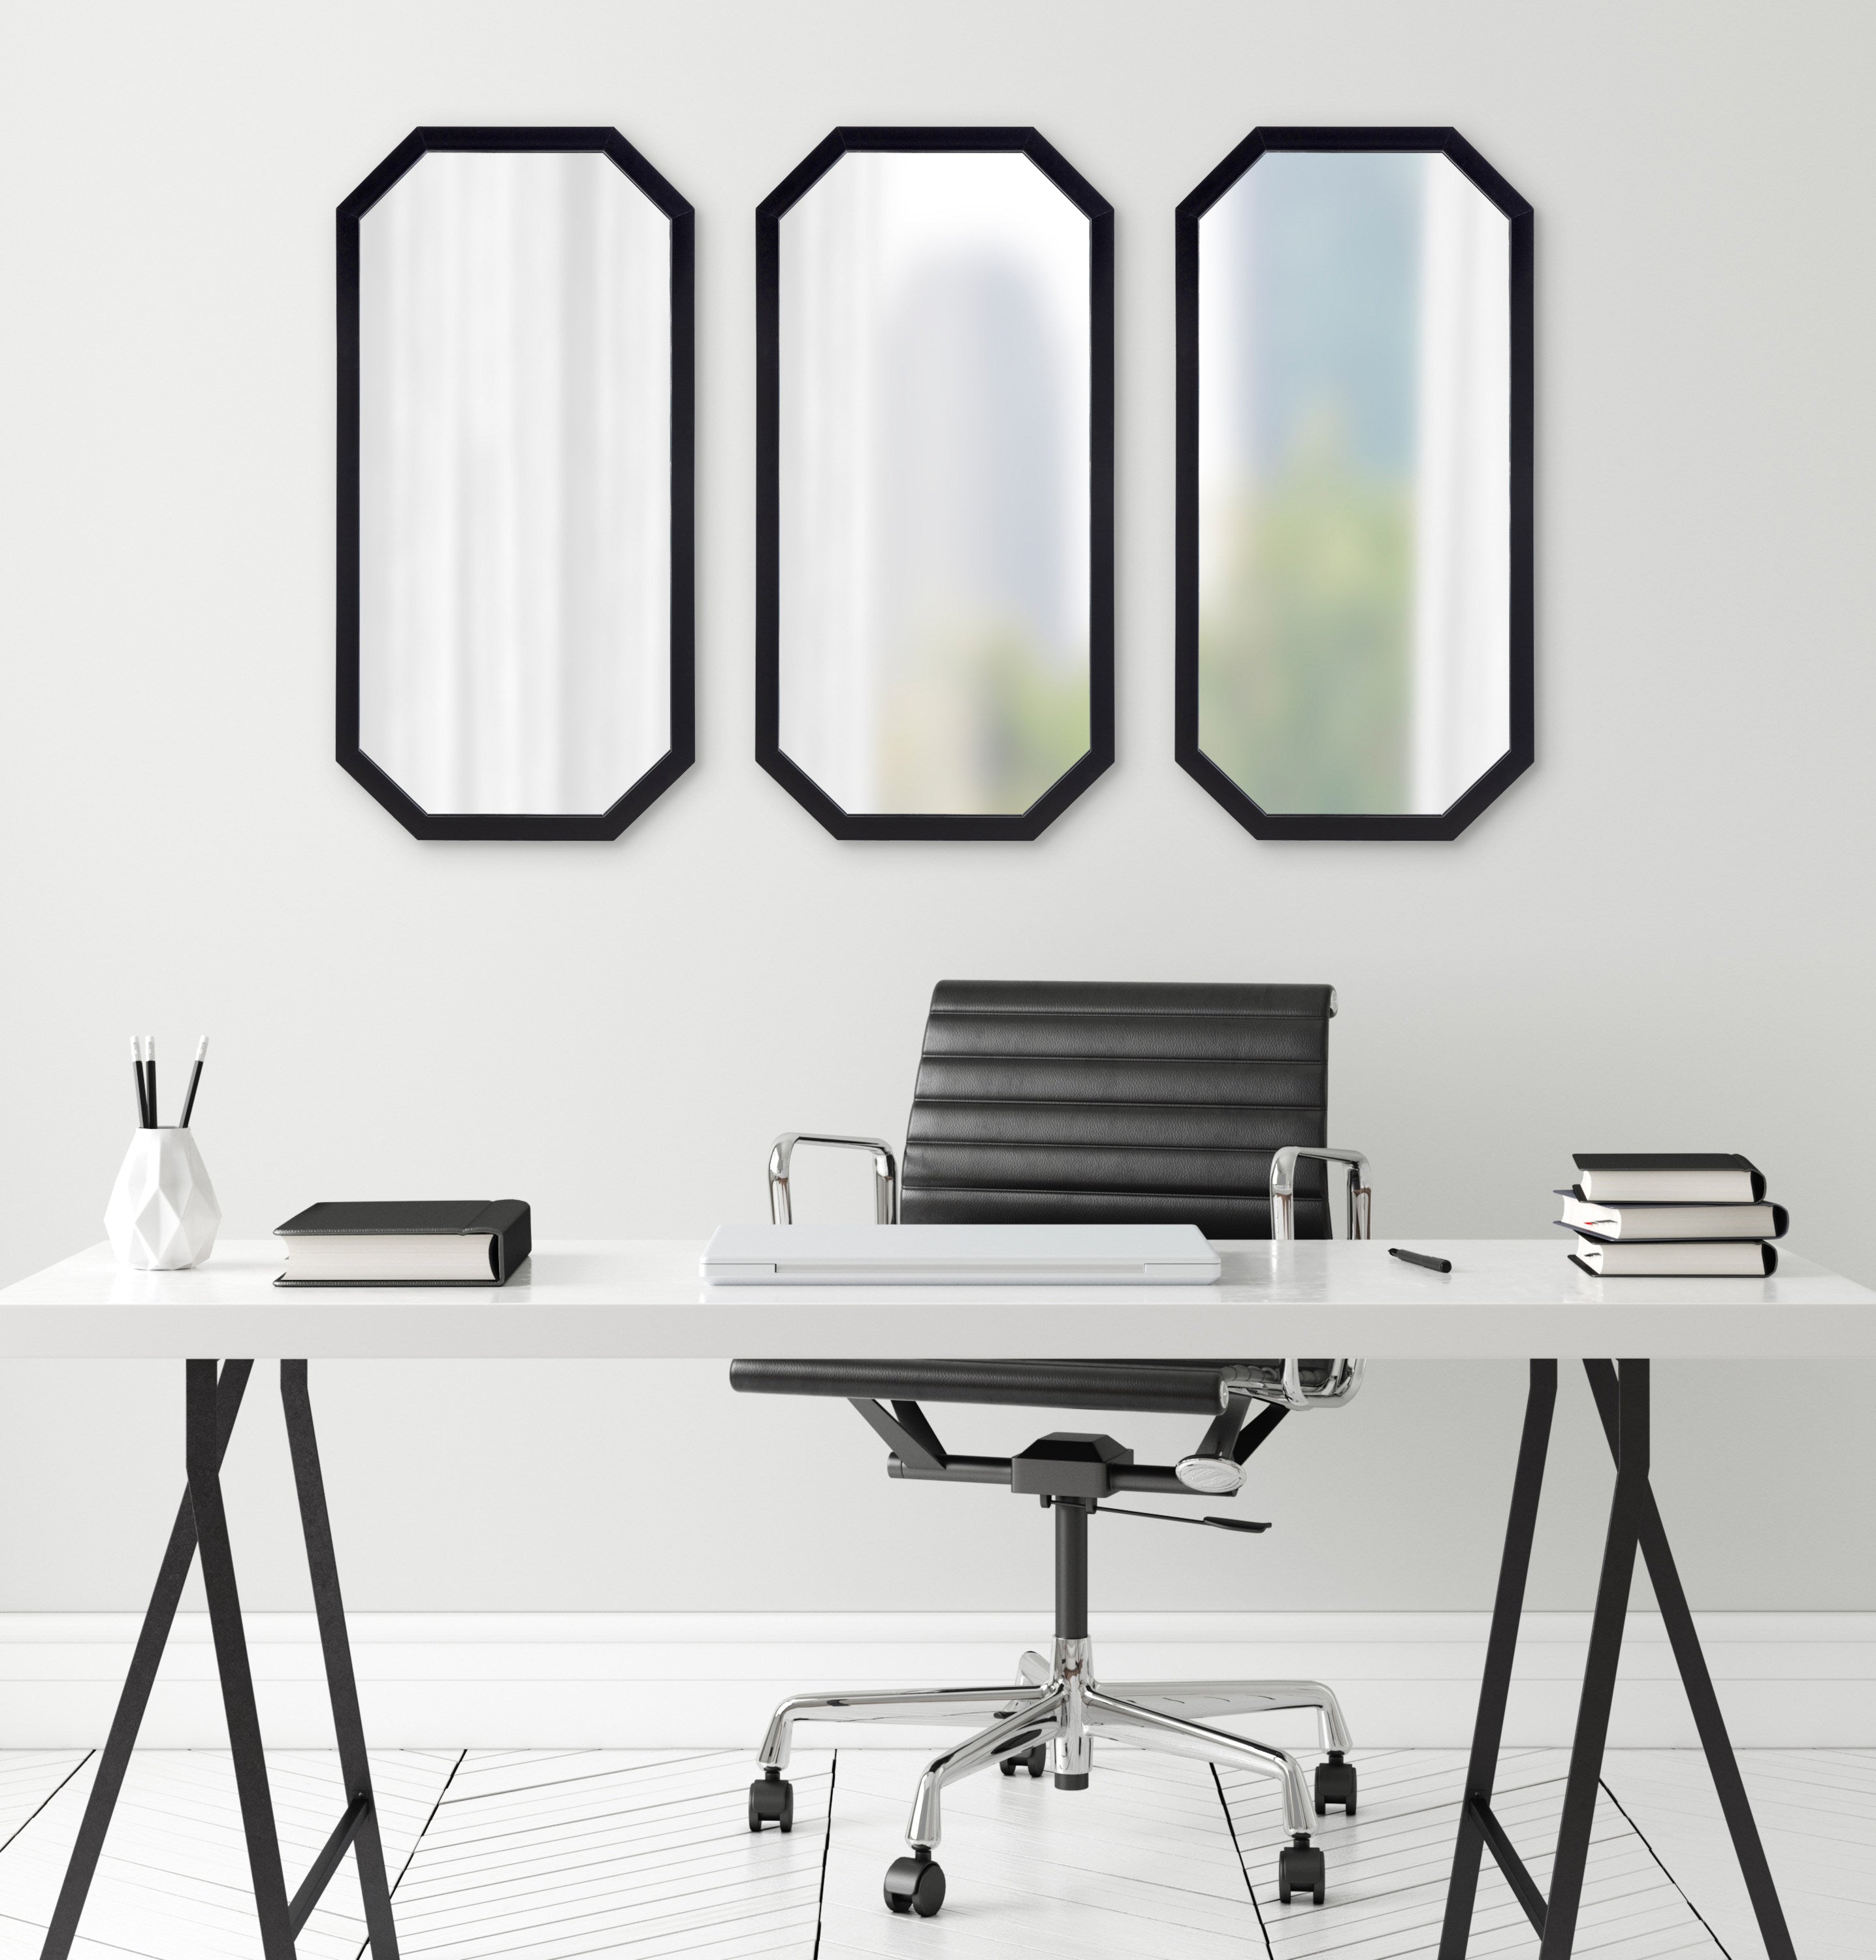 Laverty Octagon Accent Mirror Set